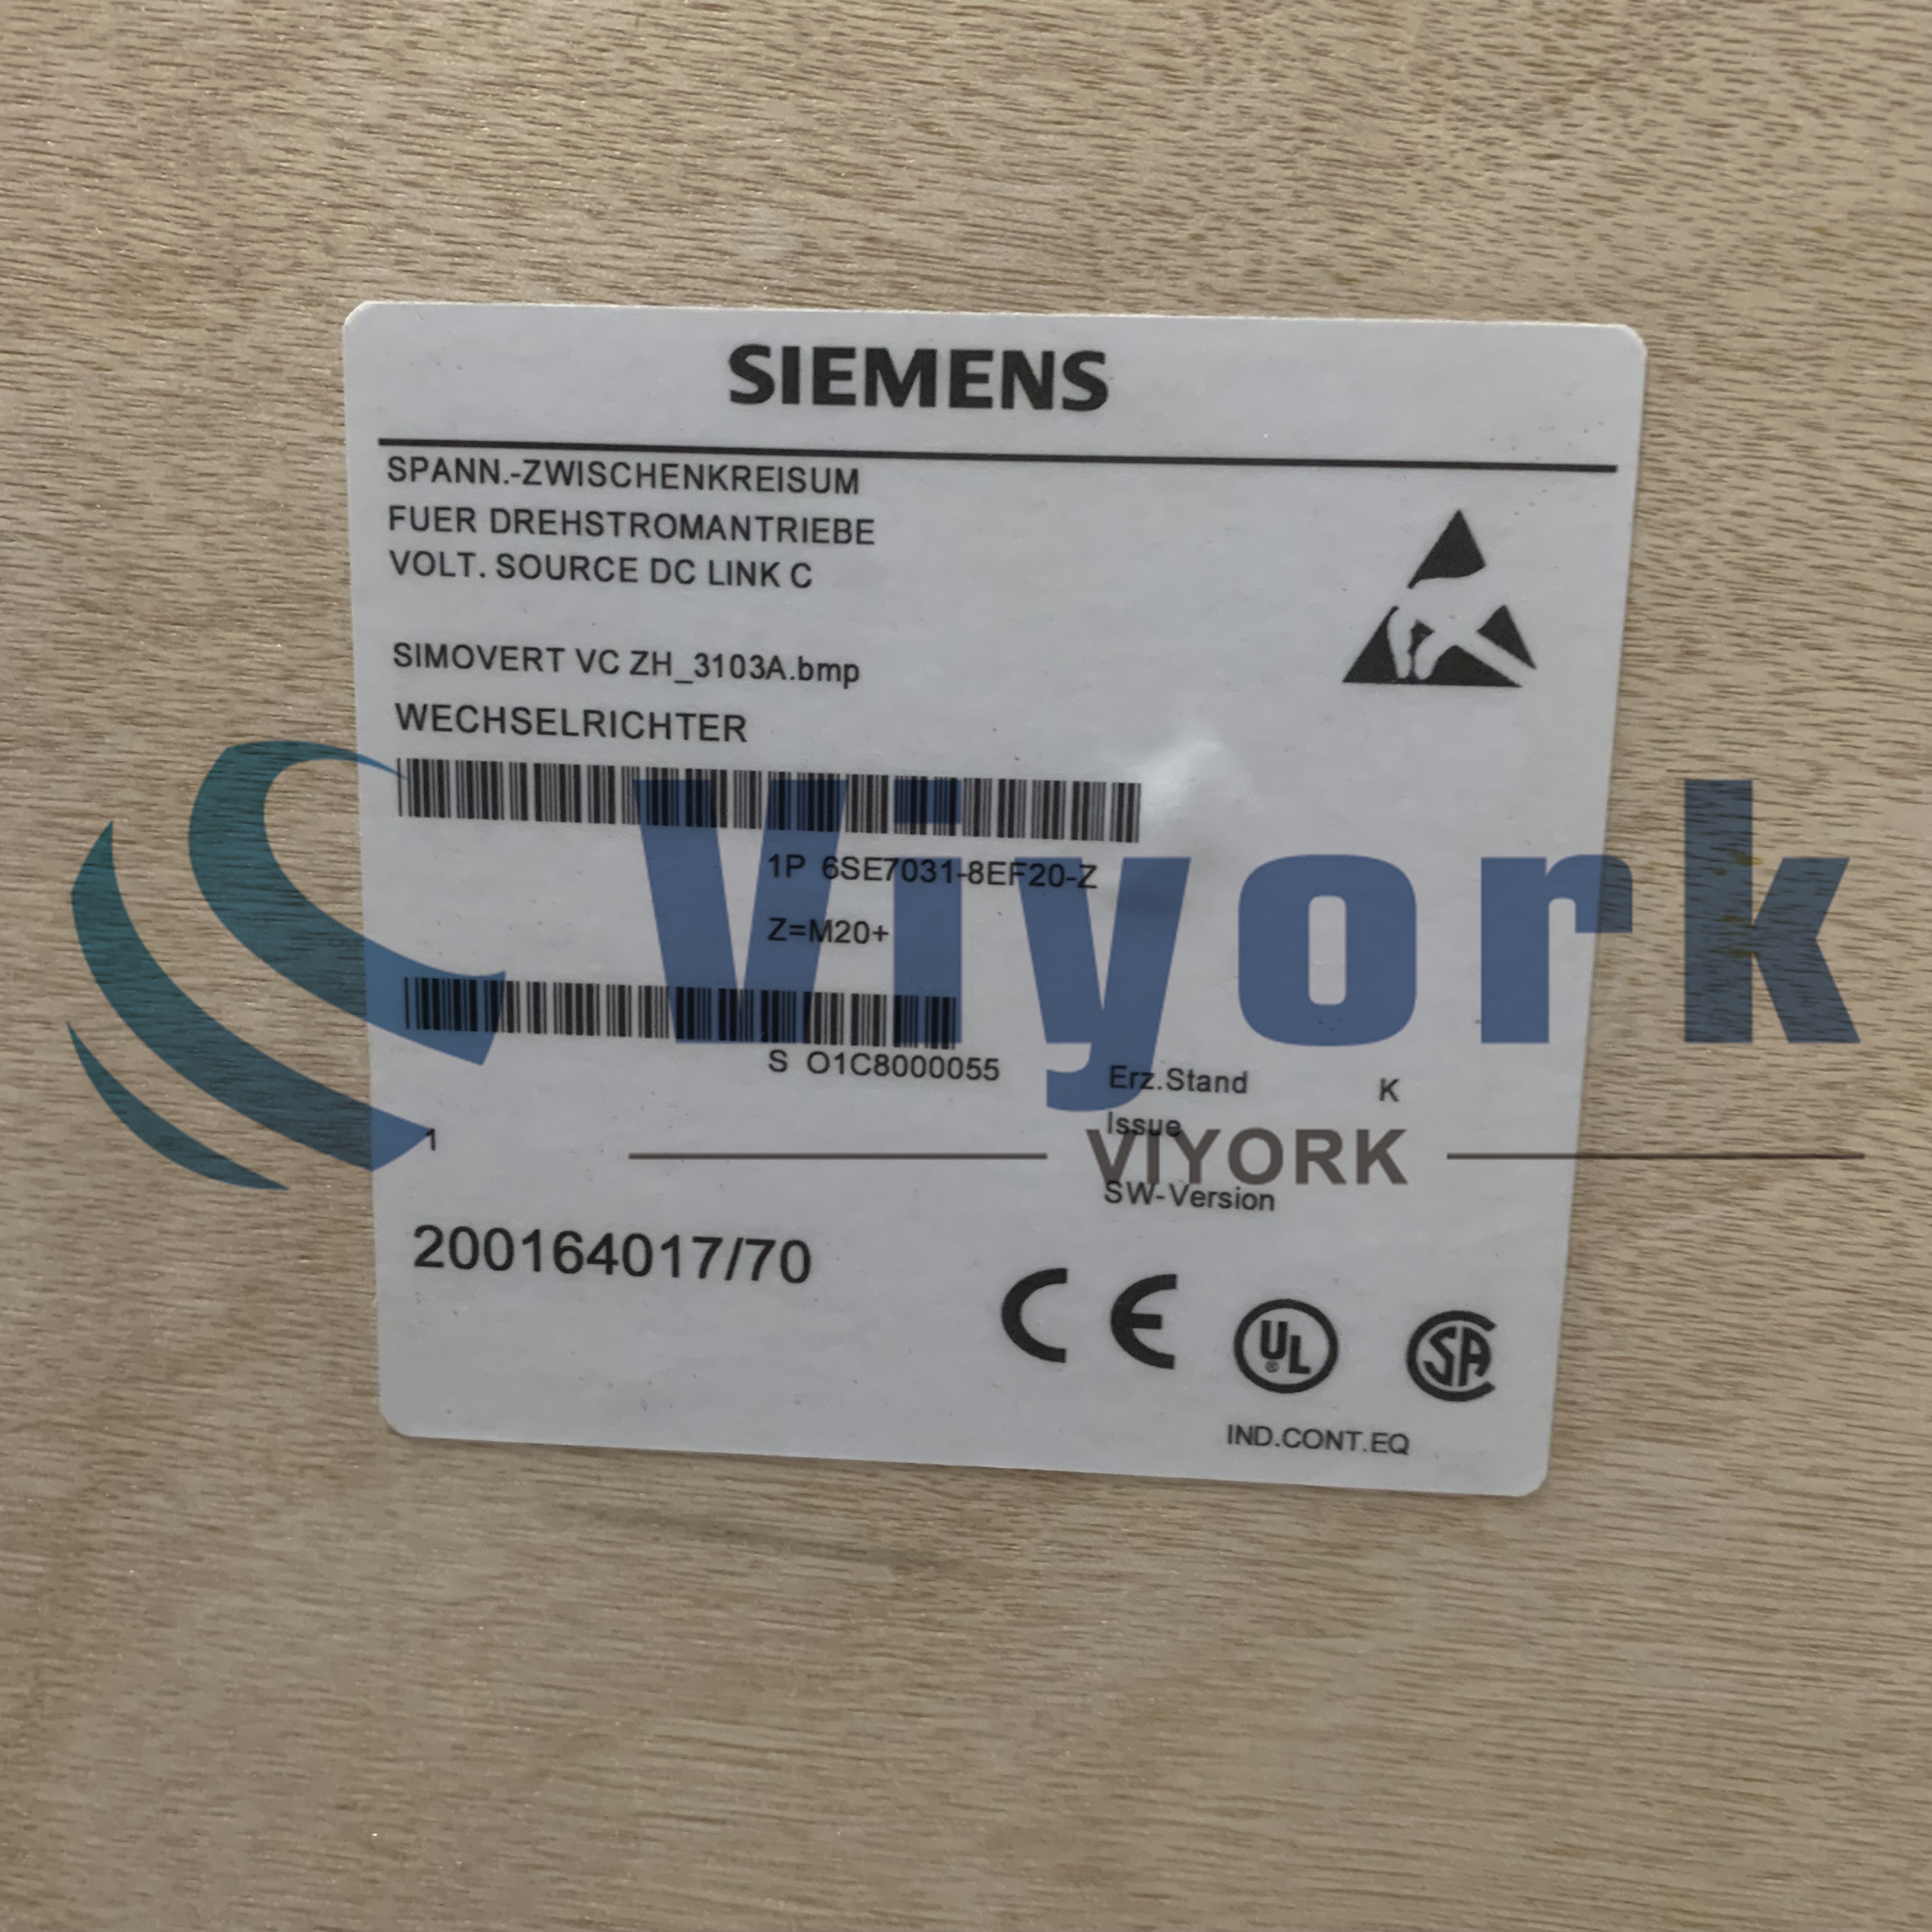 Siemens 6SE7031-8EF20-Z Z=M20 AC DRIVE SIMOVERT SERIES 3-PHASE 380-460 VAC NEW